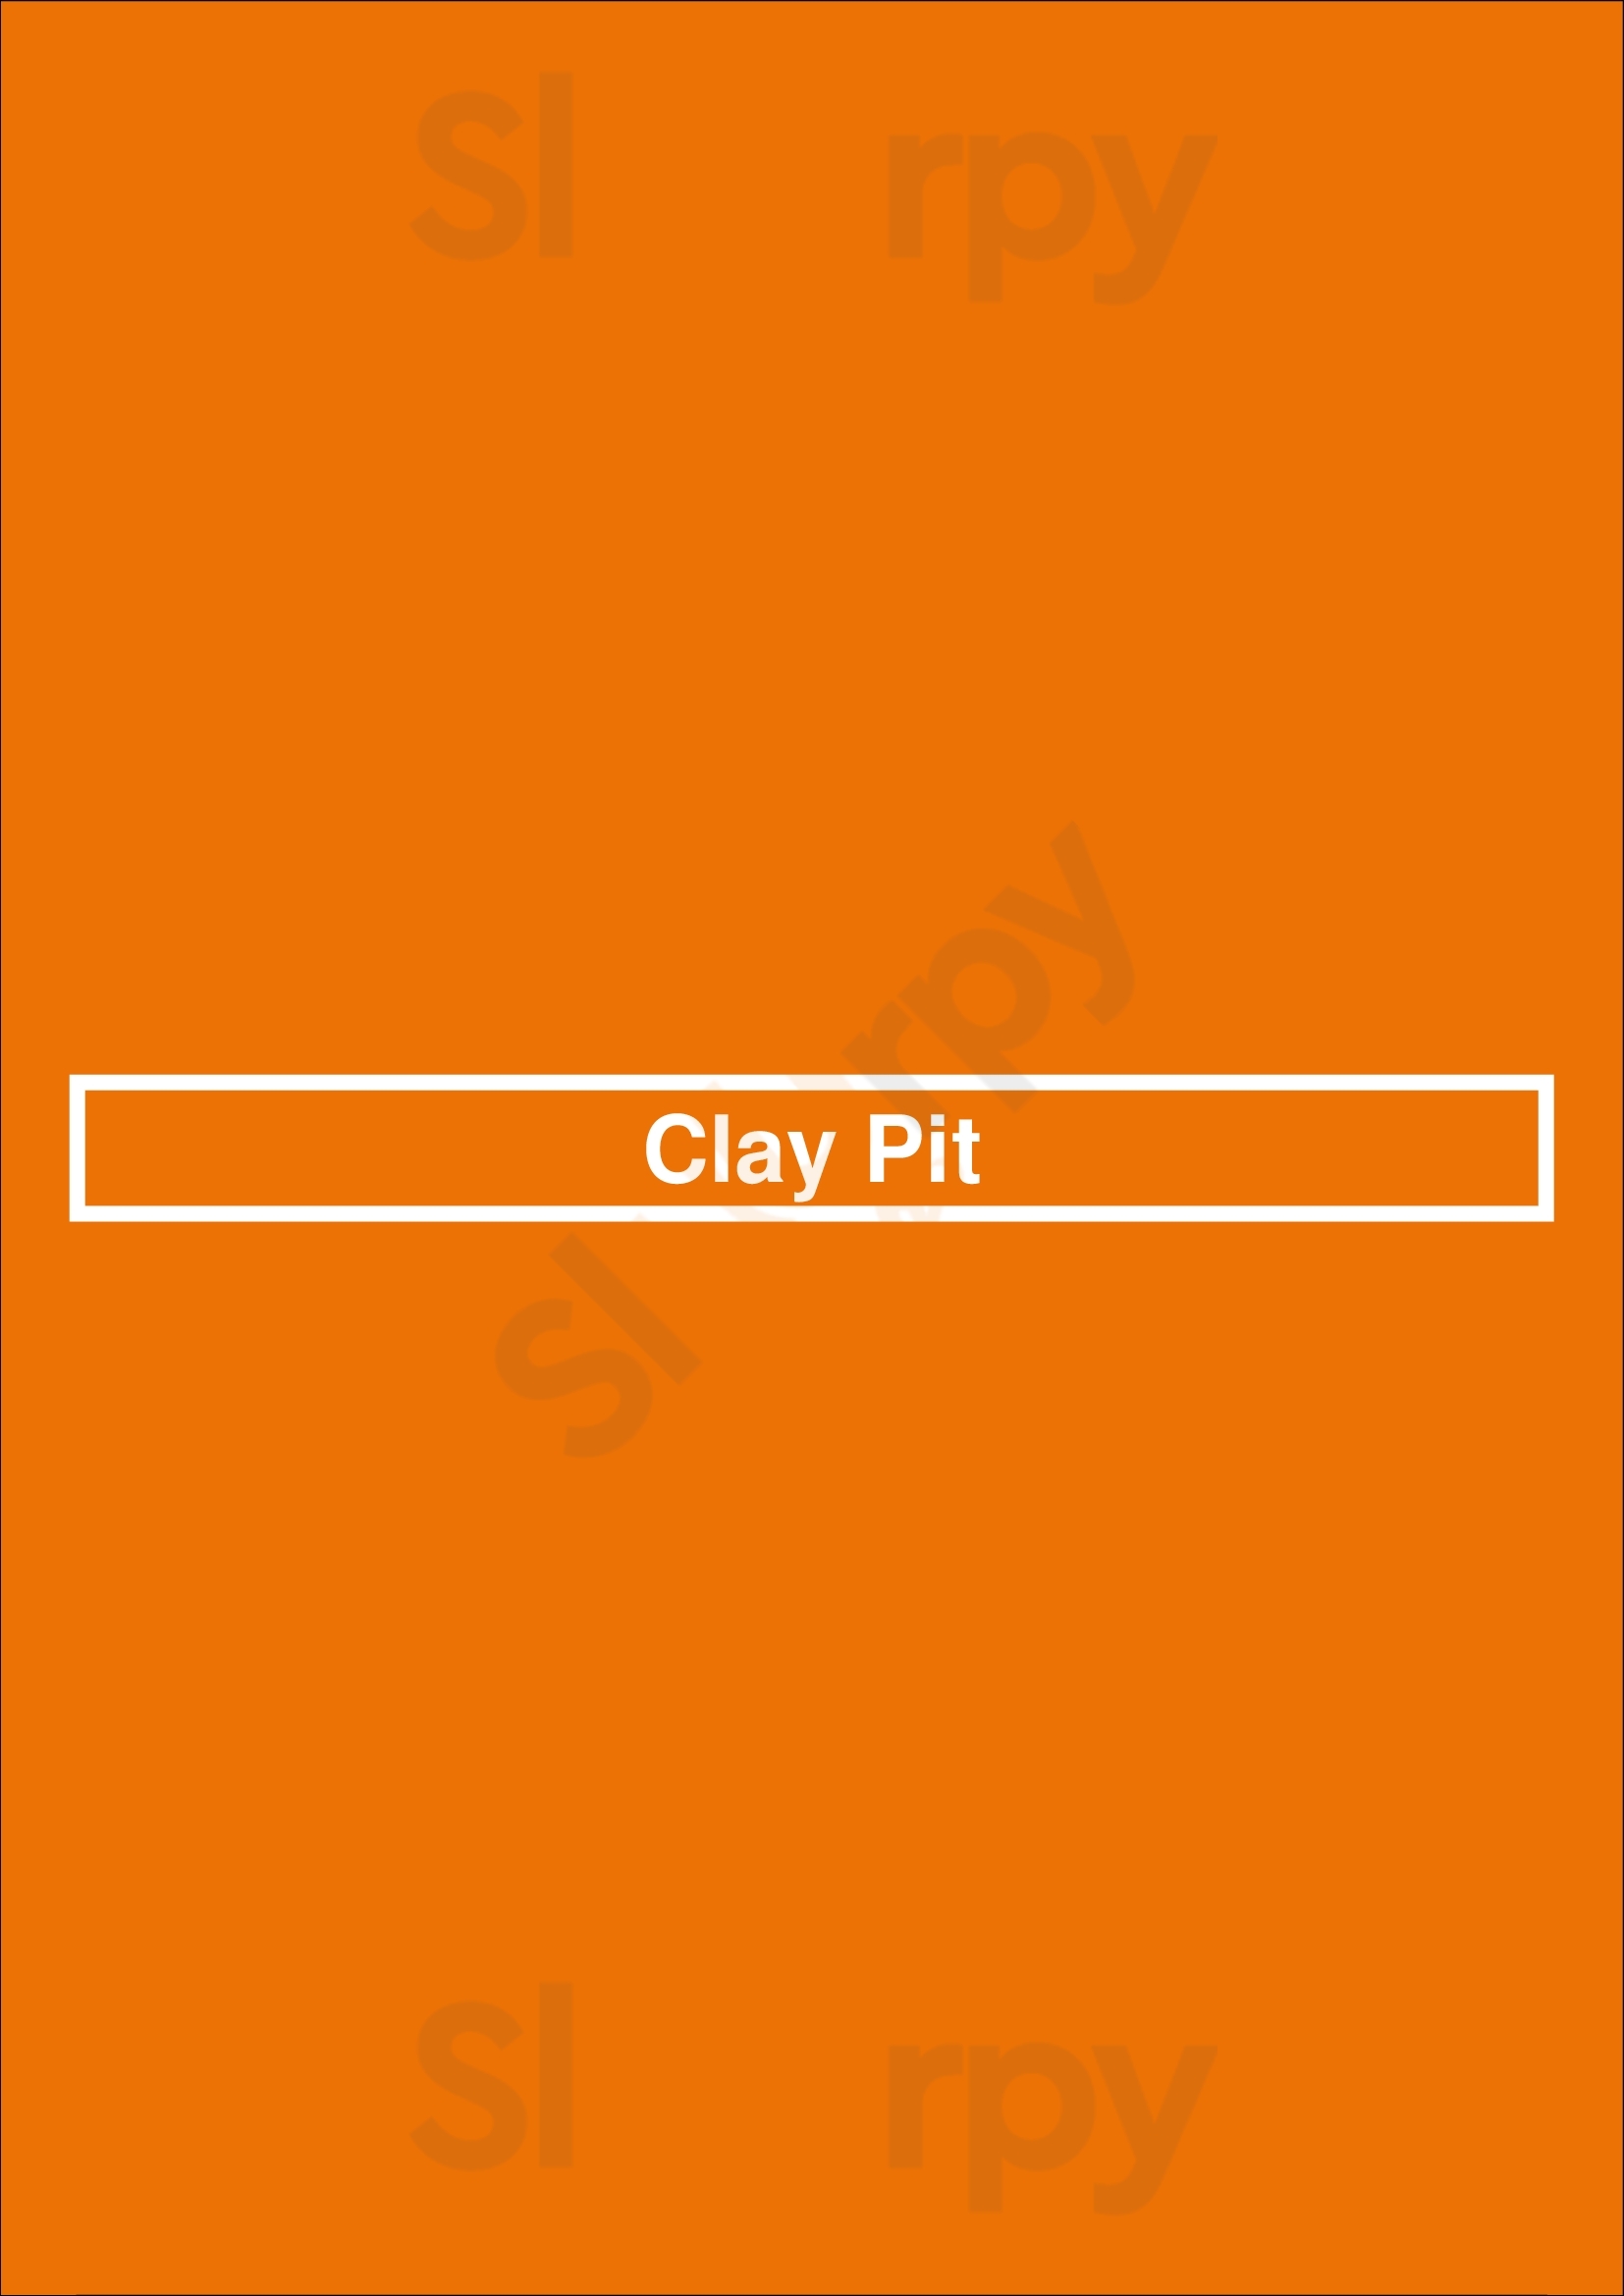 Clay Pit Austin Menu - 1